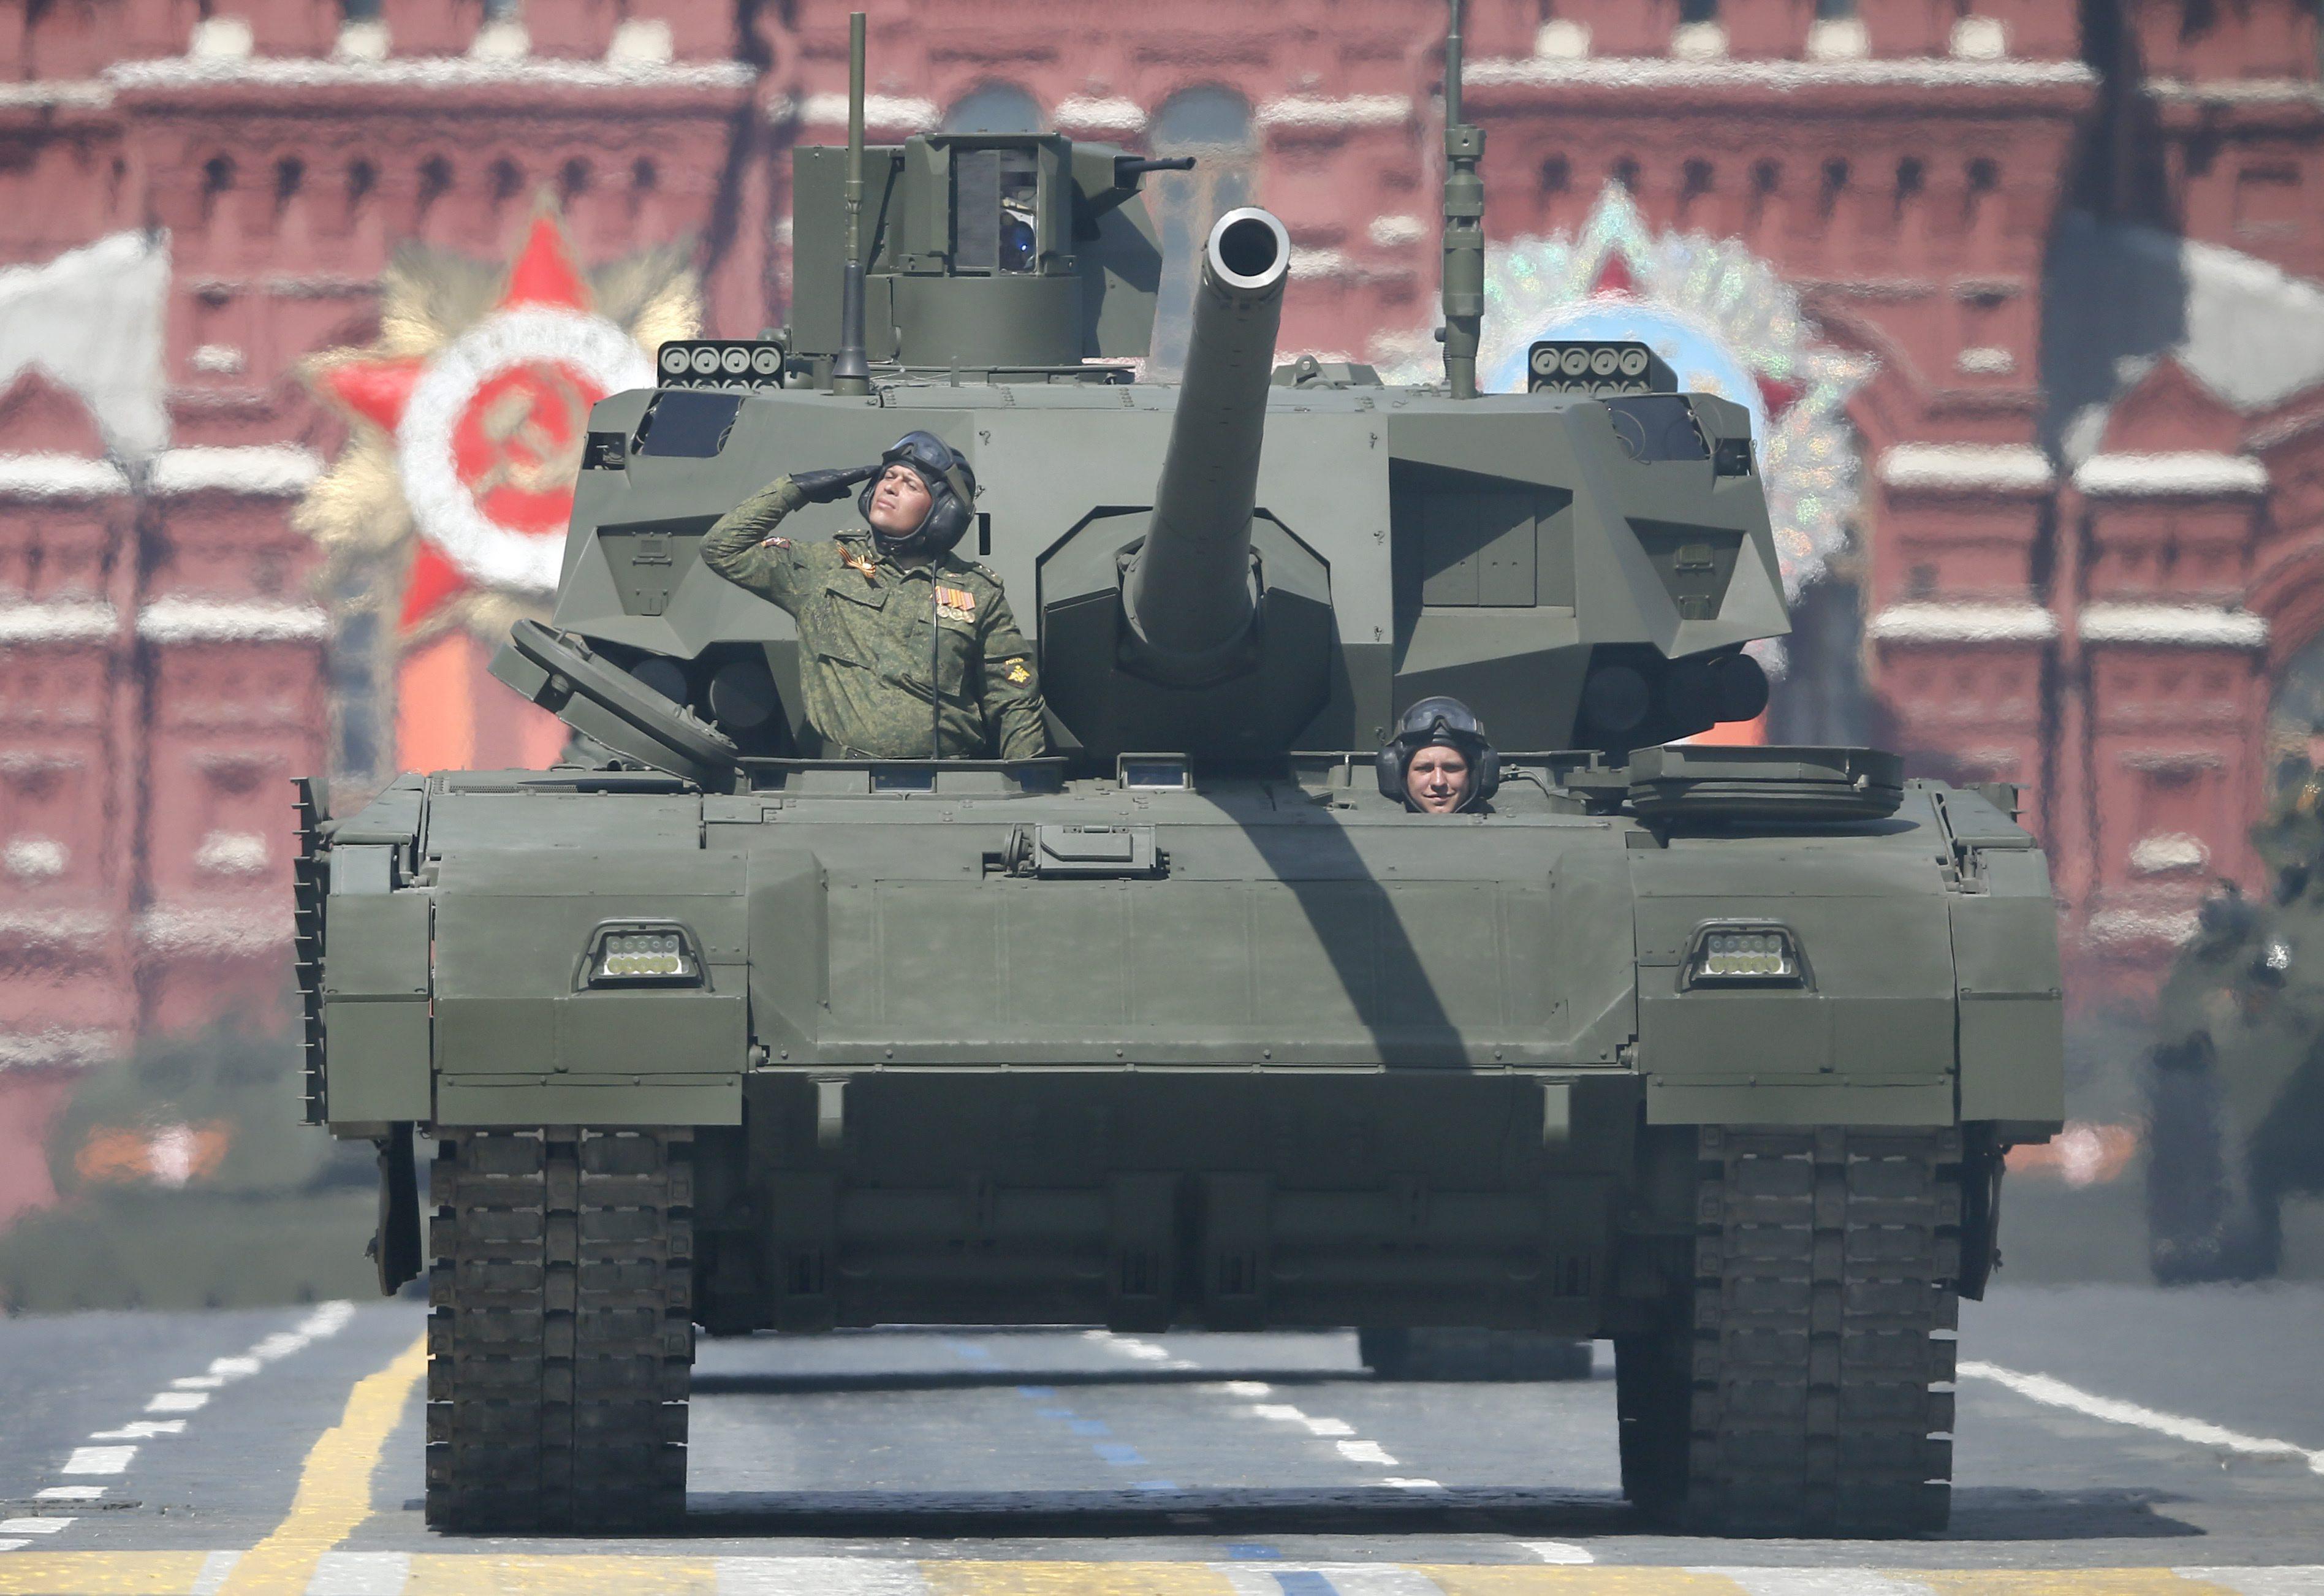 Macadam Afslachten bunker Russia's new T-14 Armata battle tank debuts in Ukraine: RIA report | South  China Morning Post